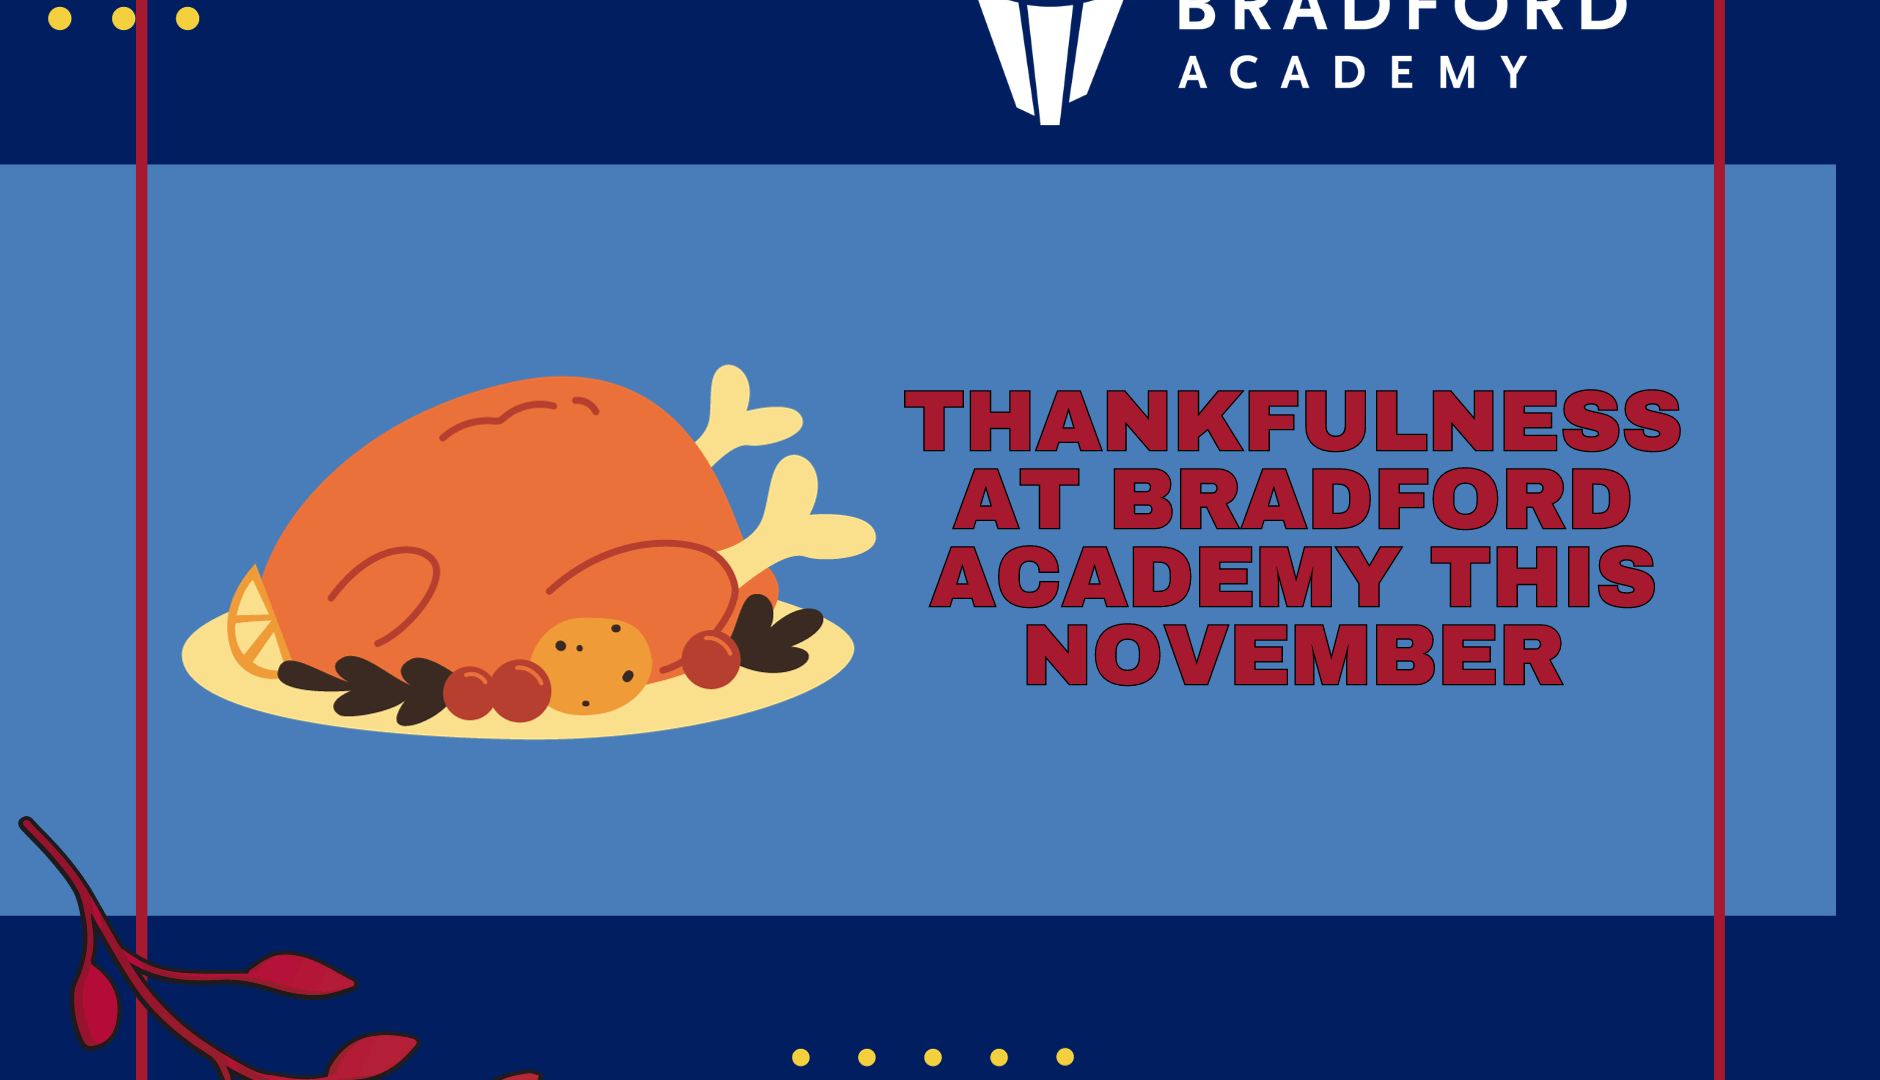 Thankfulness at Bradford Academy this November - image with Turkey, logo and decorative imagery